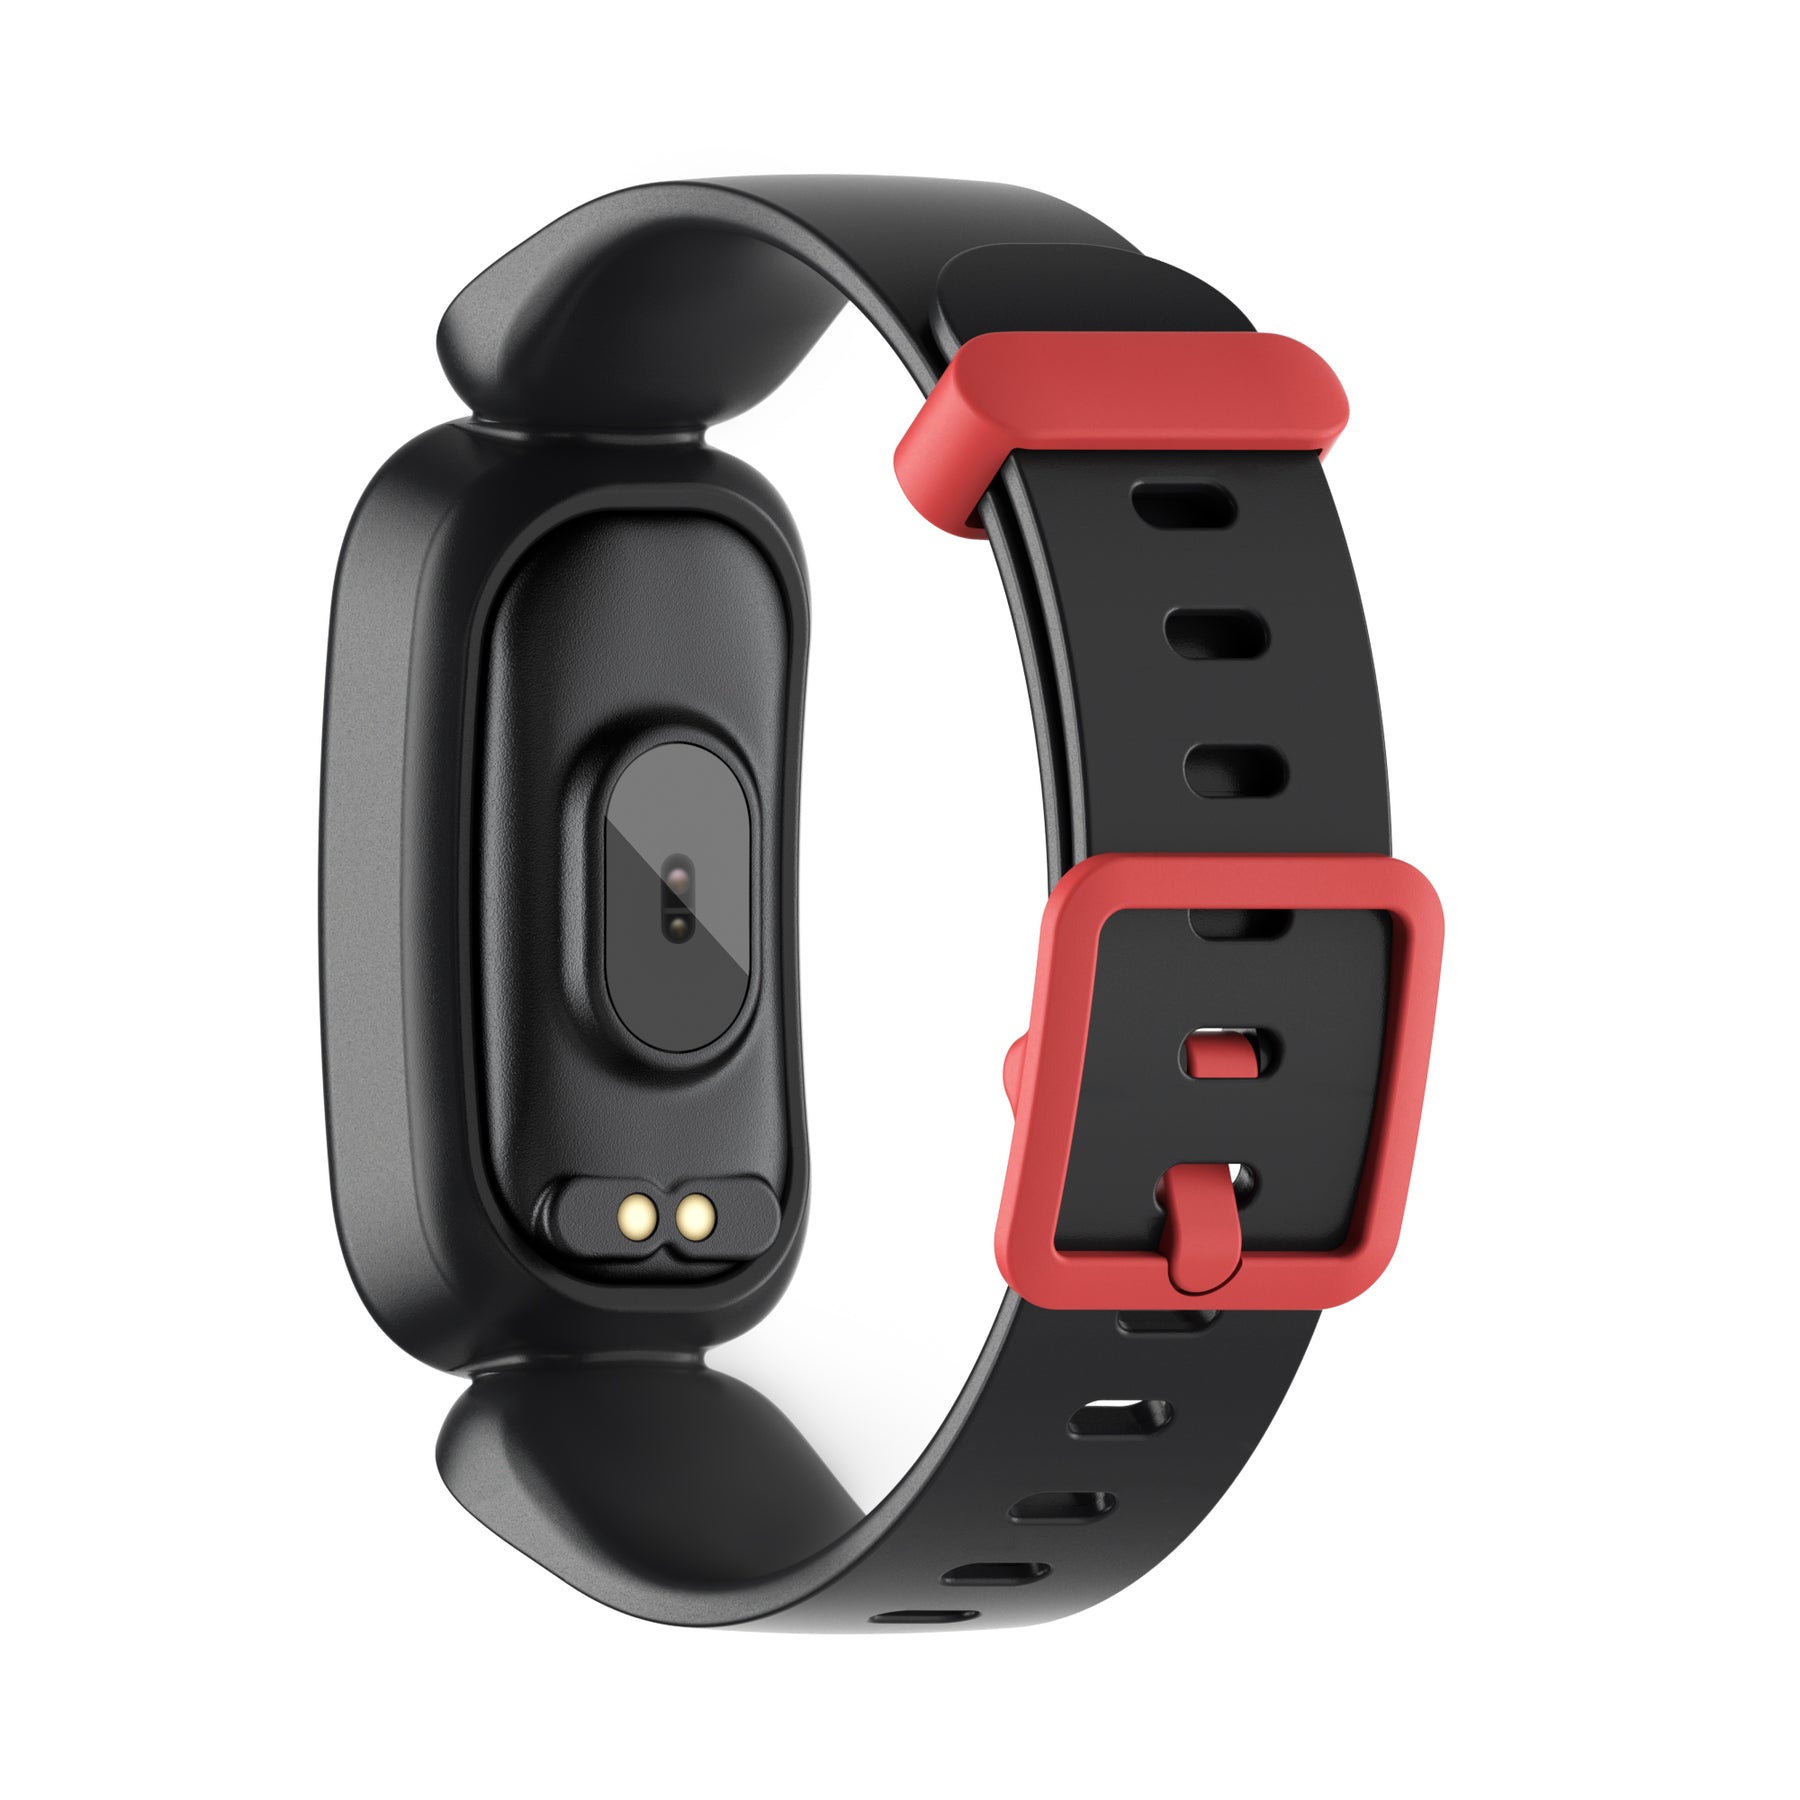 Bearscome Children Alarm Clock Sleep Monitor Sport Wristband Fitness Bracelet Waterproof Smart Watch